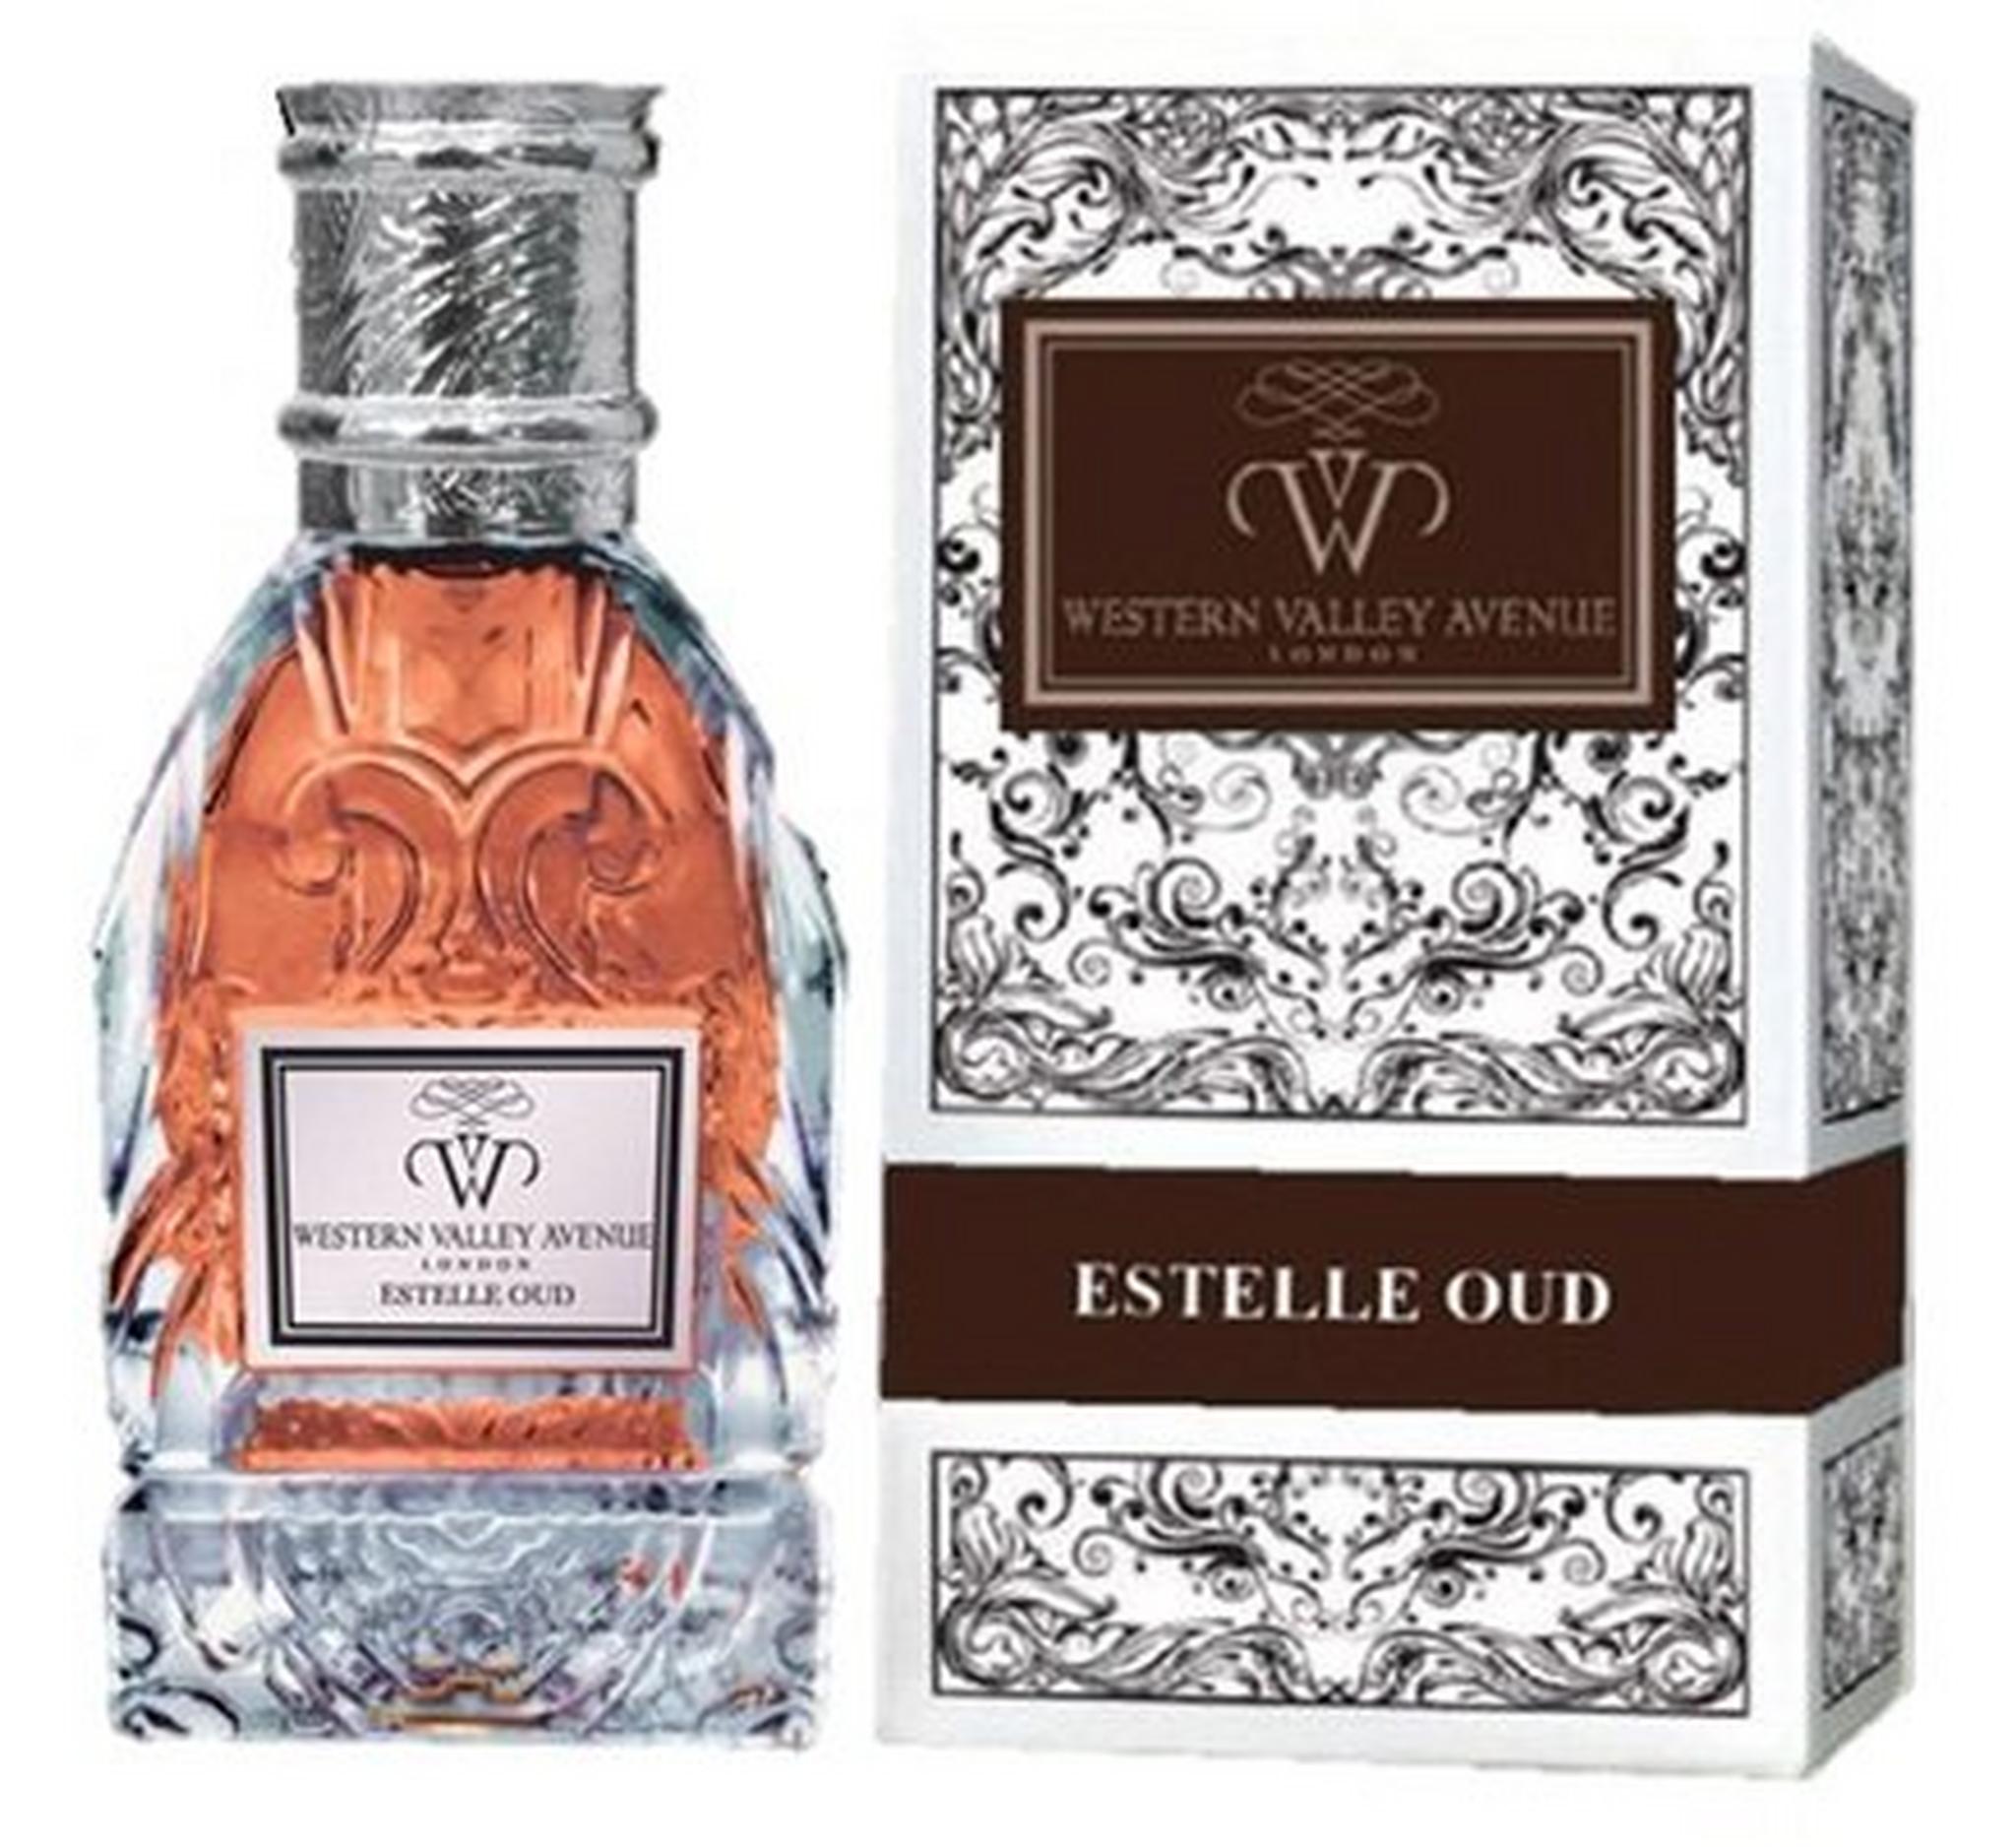 Western Valley Avenue London Estelle Perfume for Men and Women 75ml